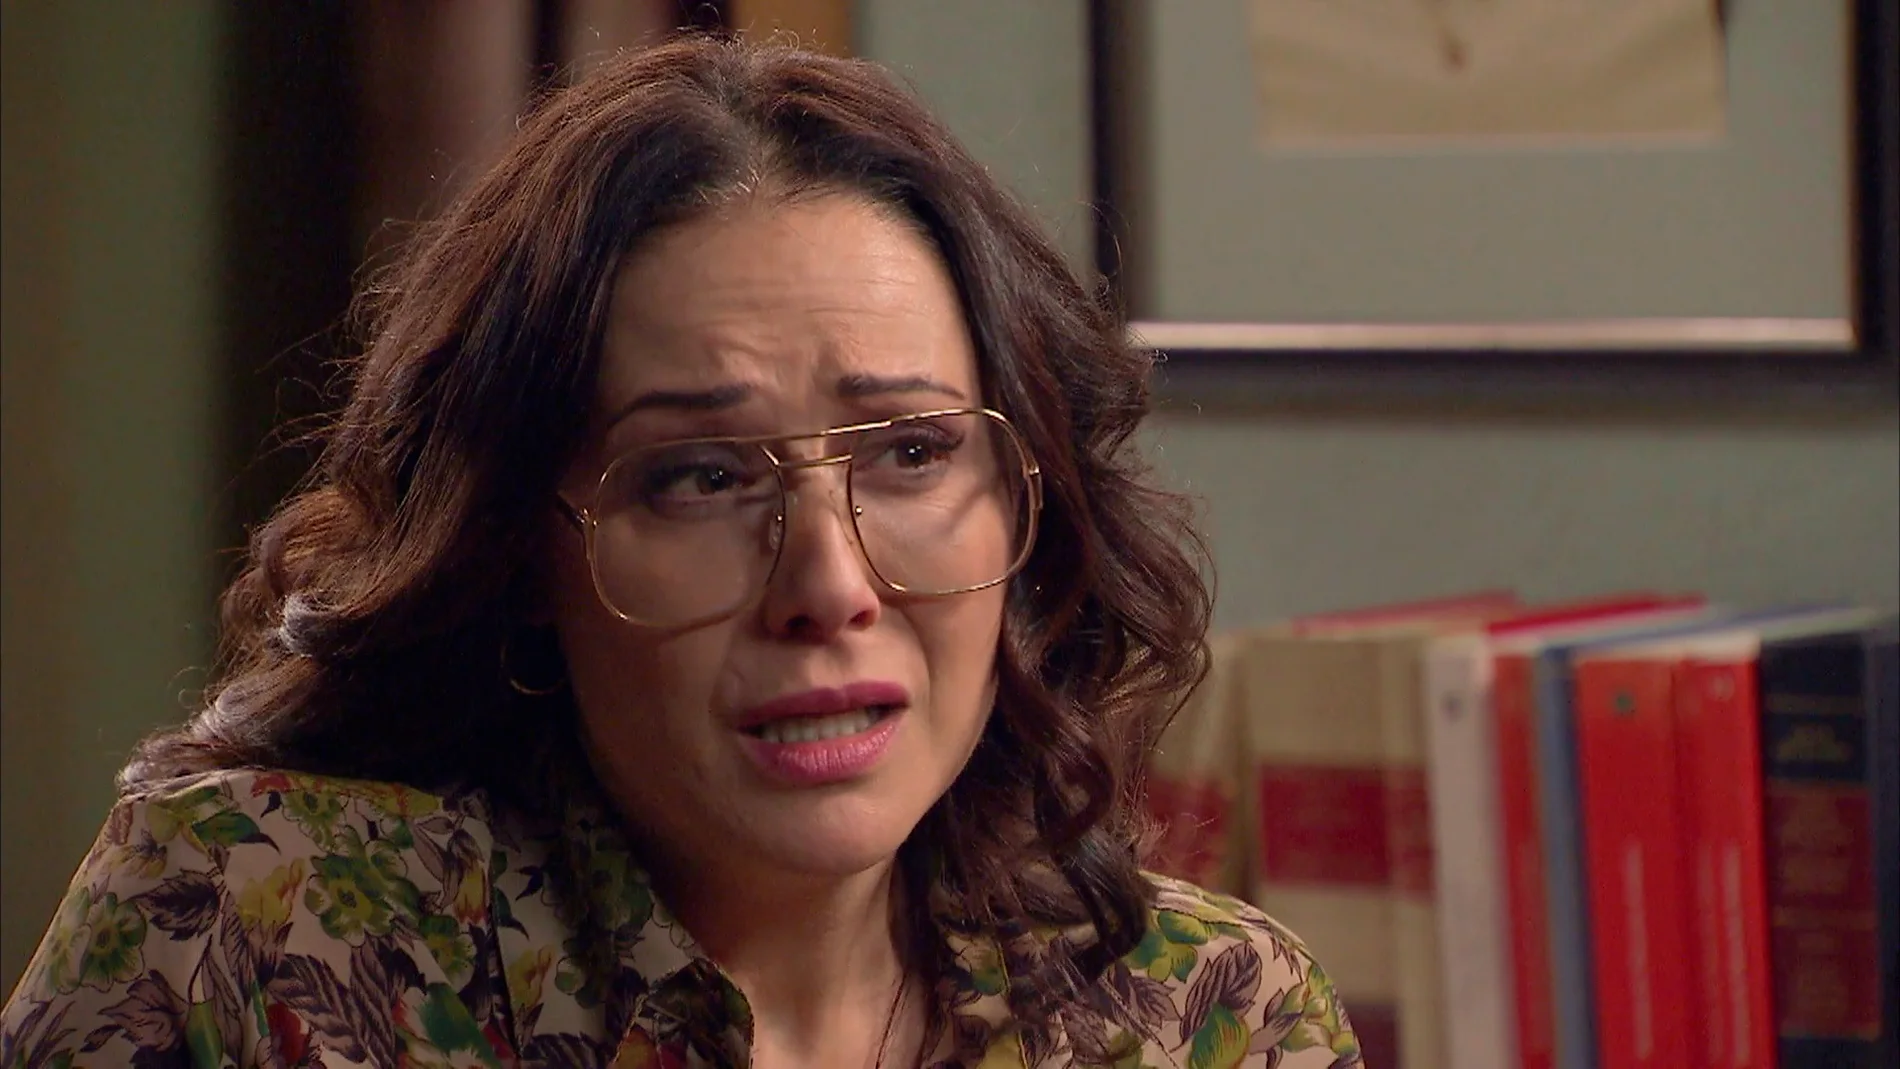 Isabel acusa a Cristina de haber provocado la muerte de su padre: “Ha sido tu culpa”